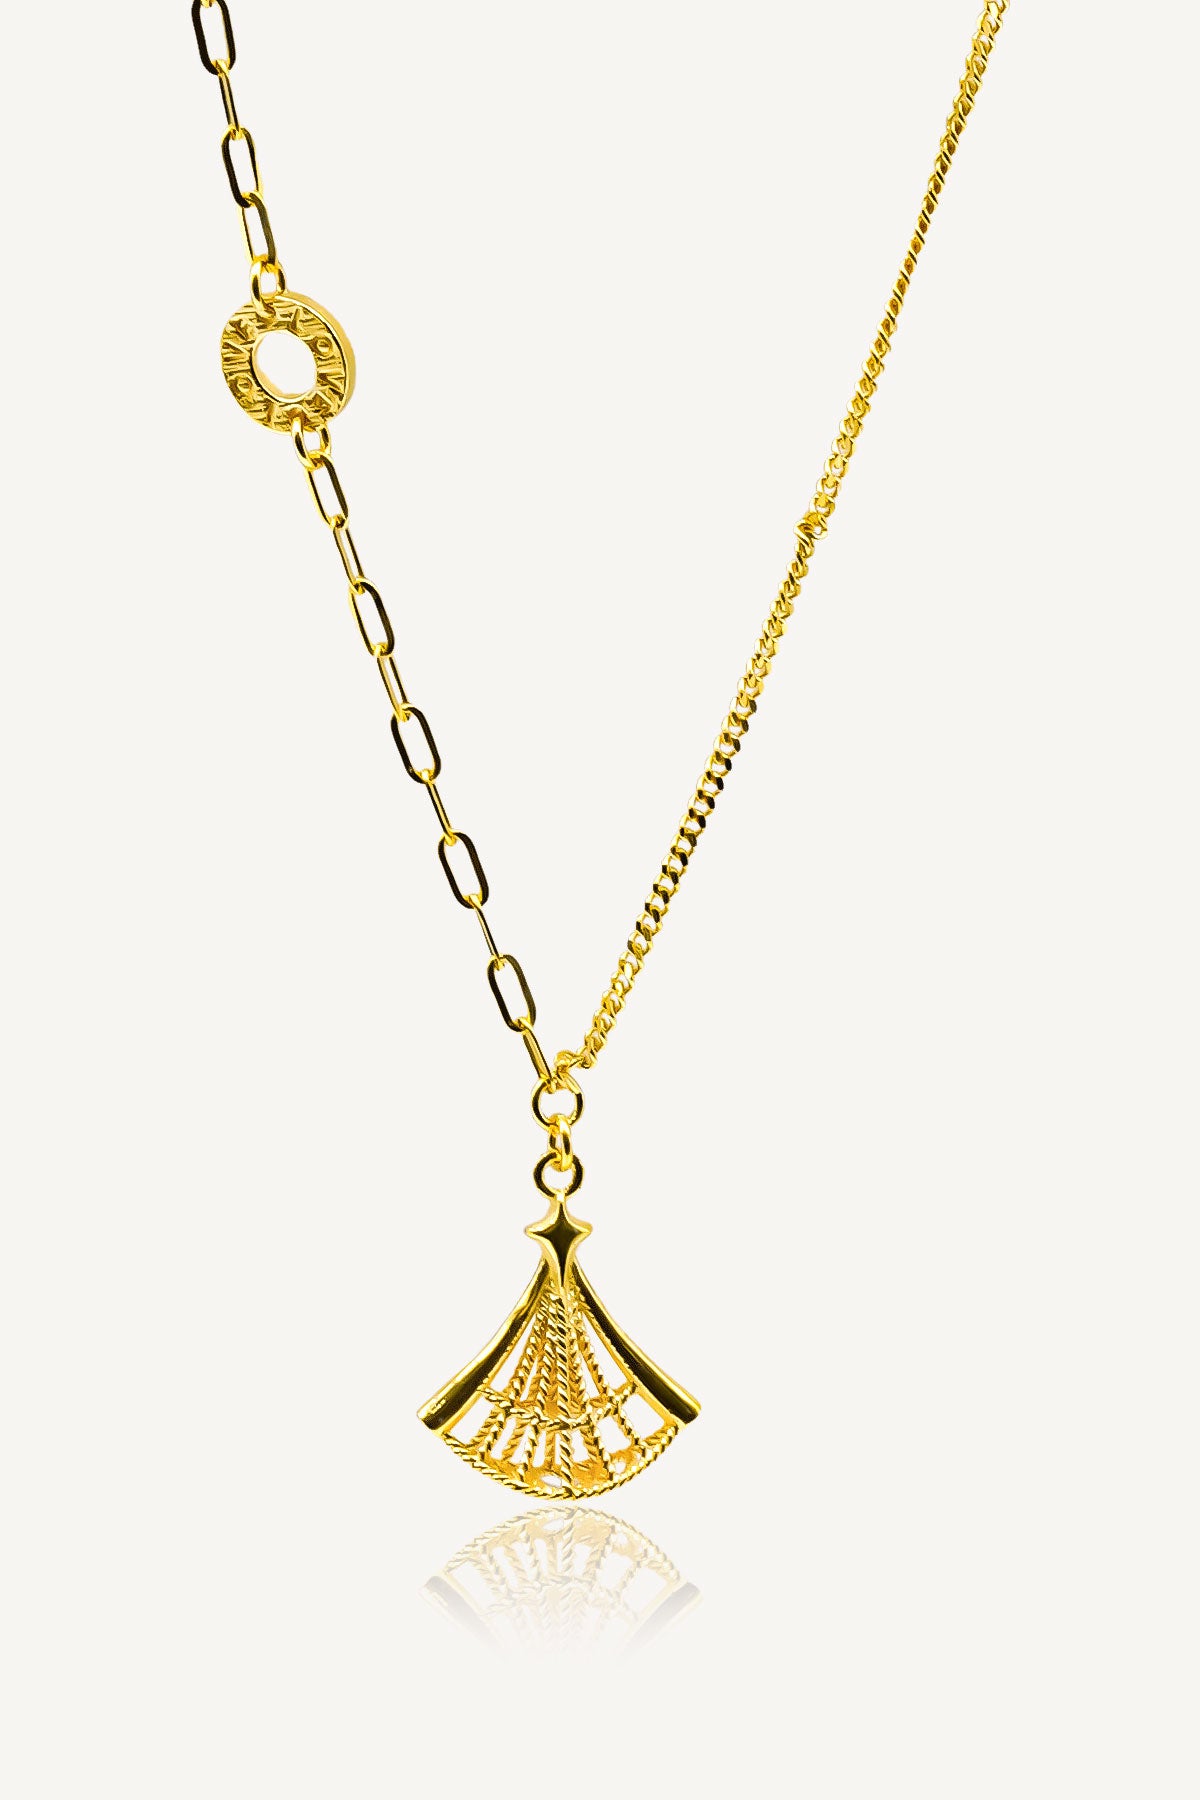 916 Gold Elegant Fan Necklace